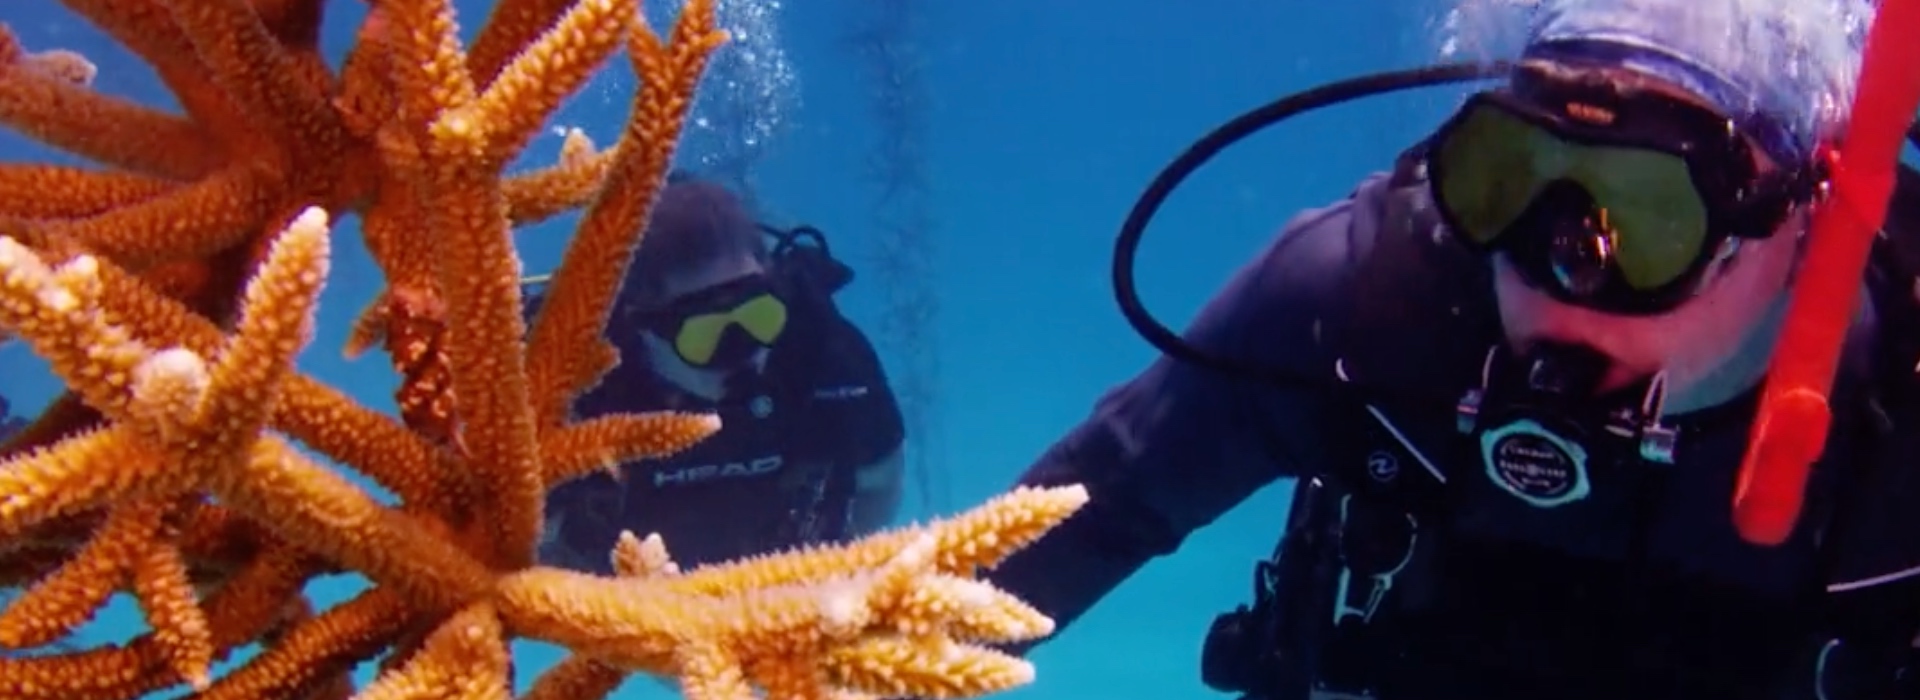 Scuba divers at coral reef